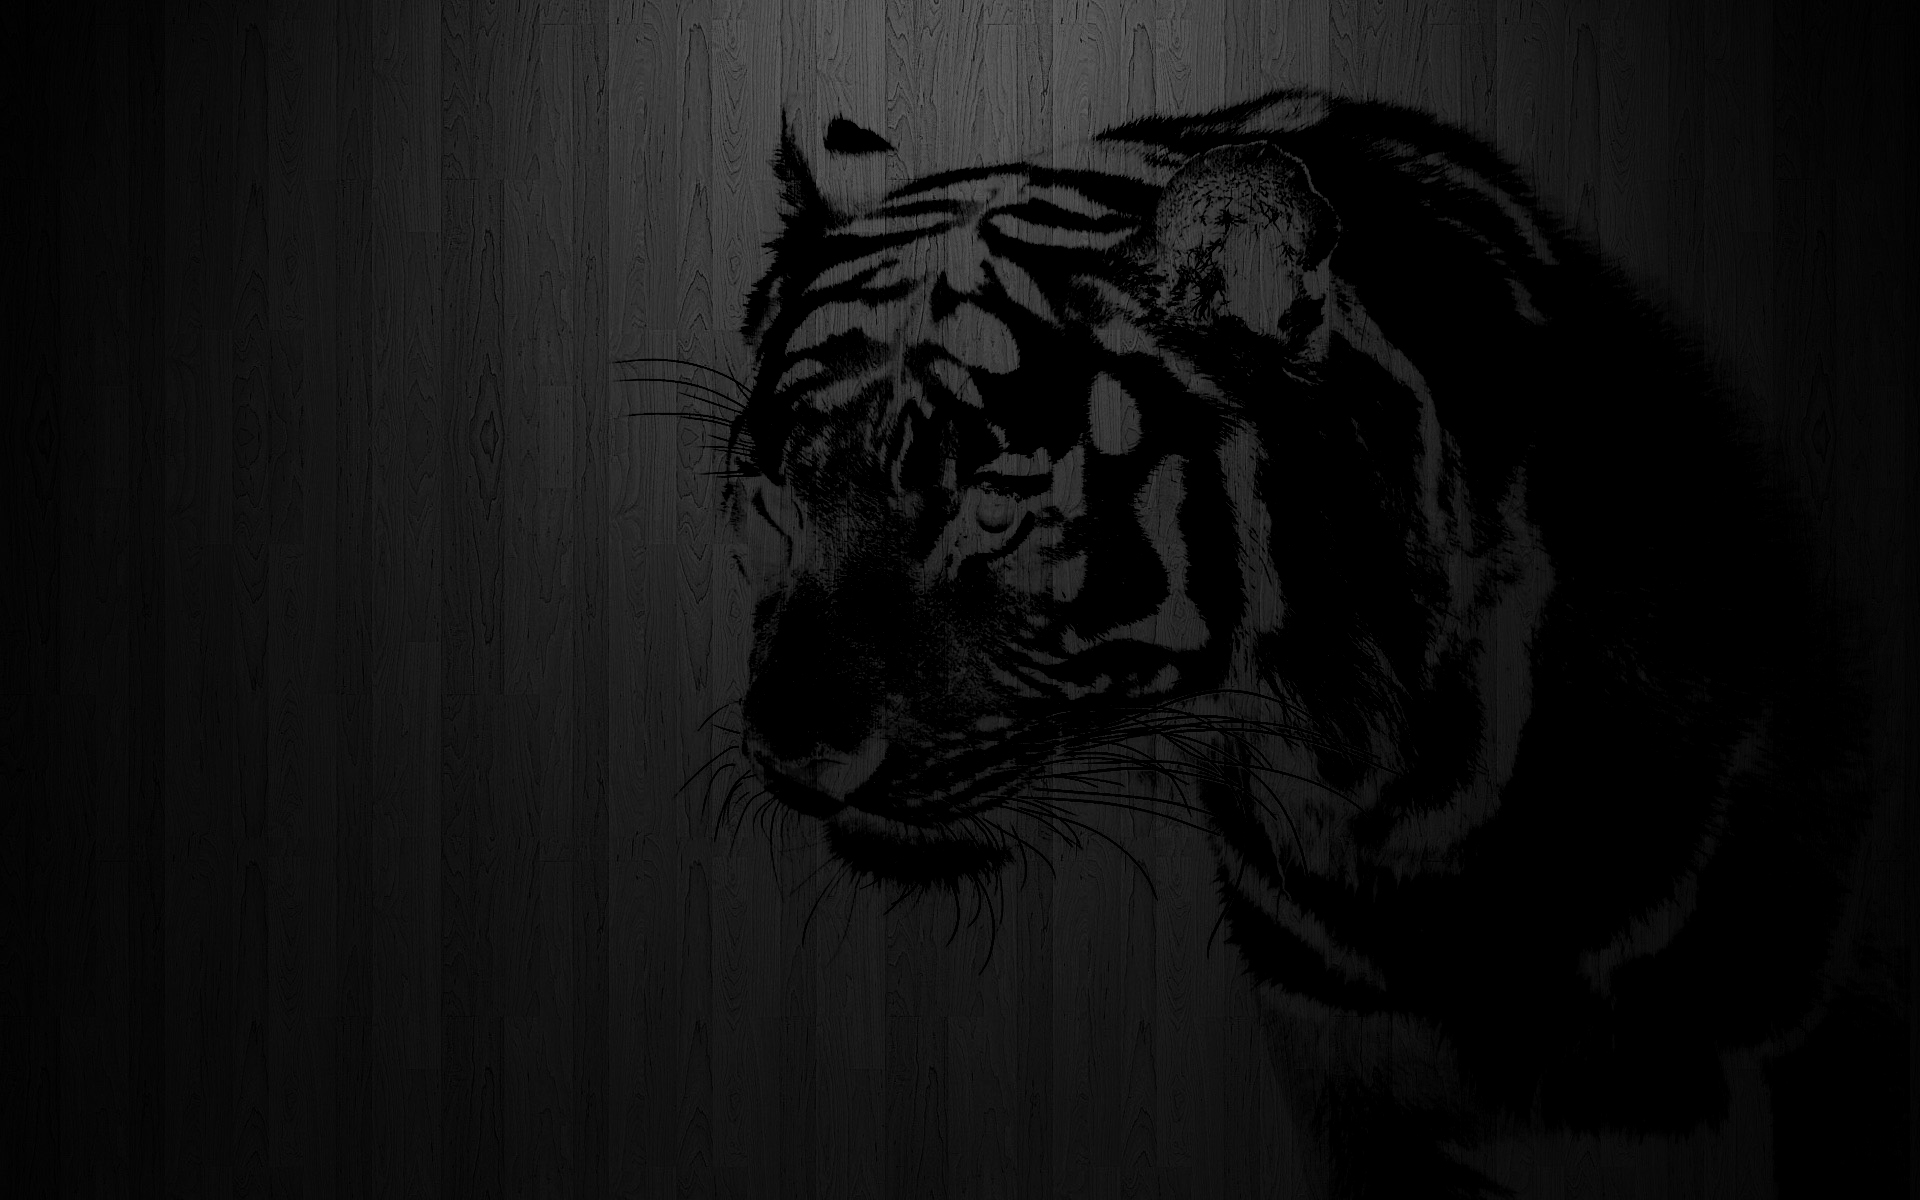 Black Tiger Hd Wallpapers